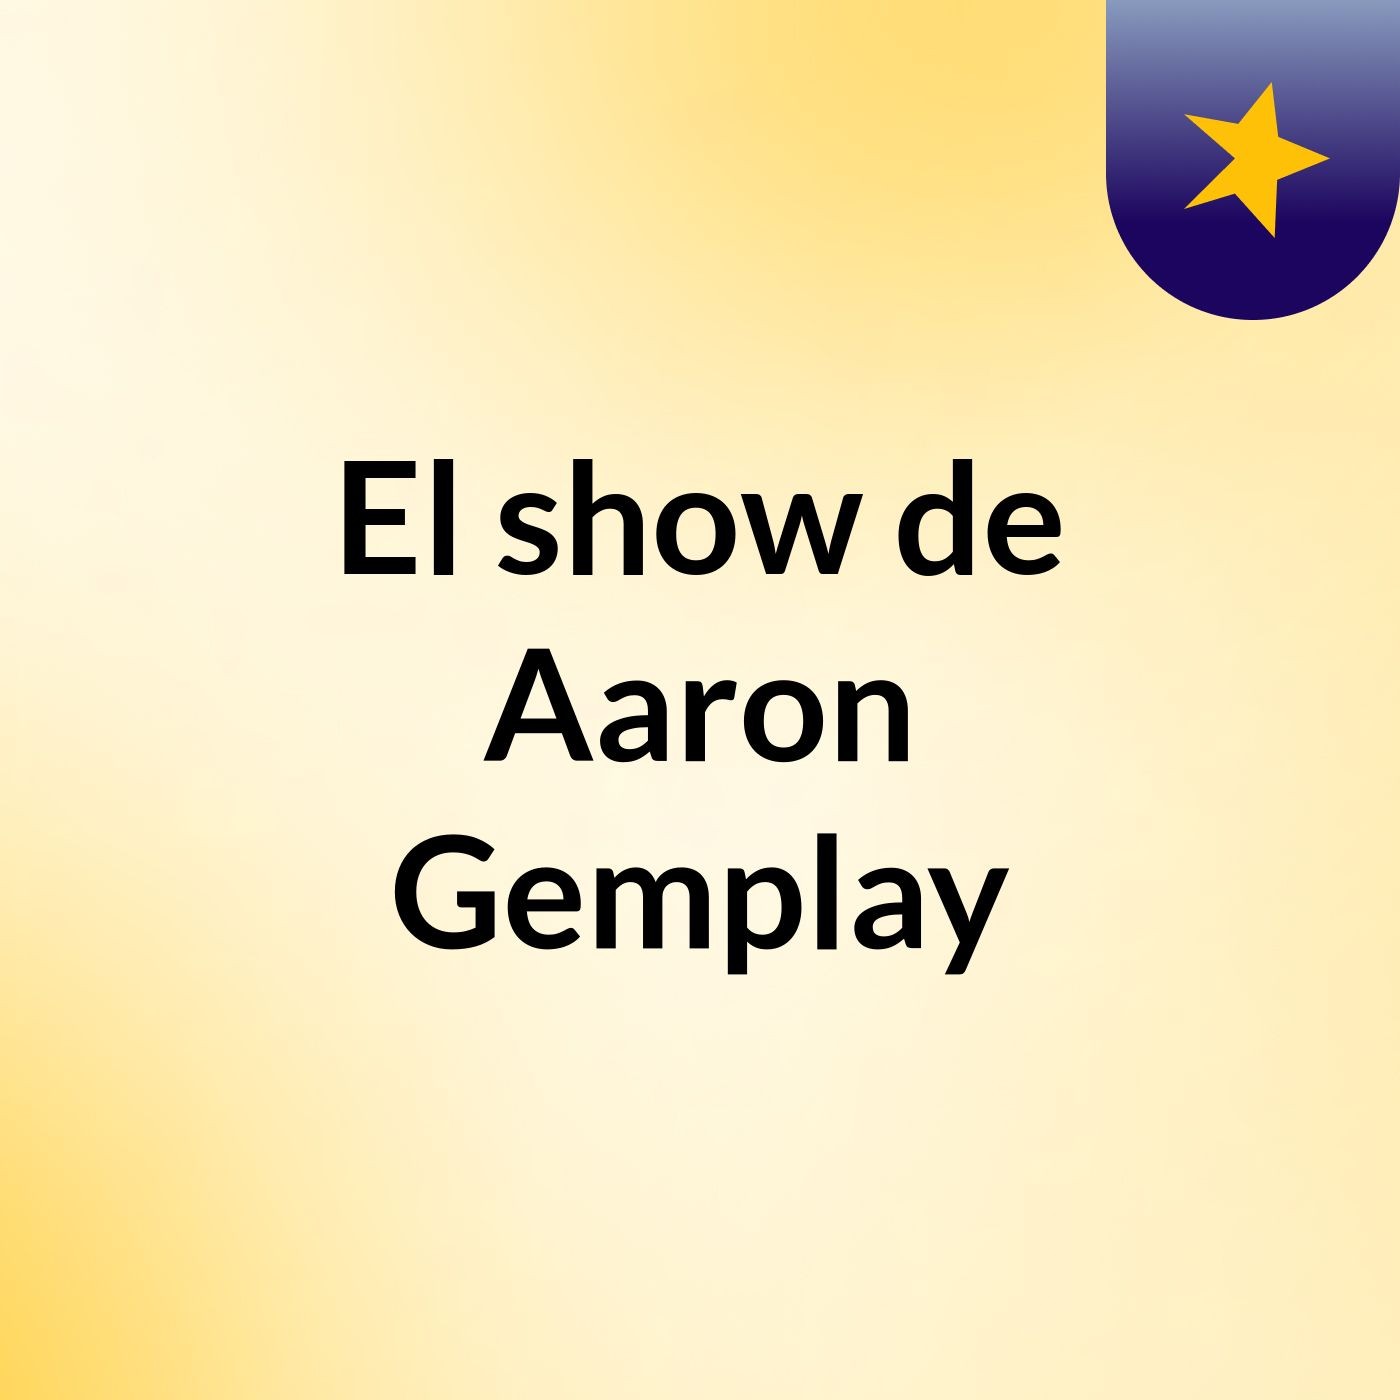 El show de Aaron Gemplay